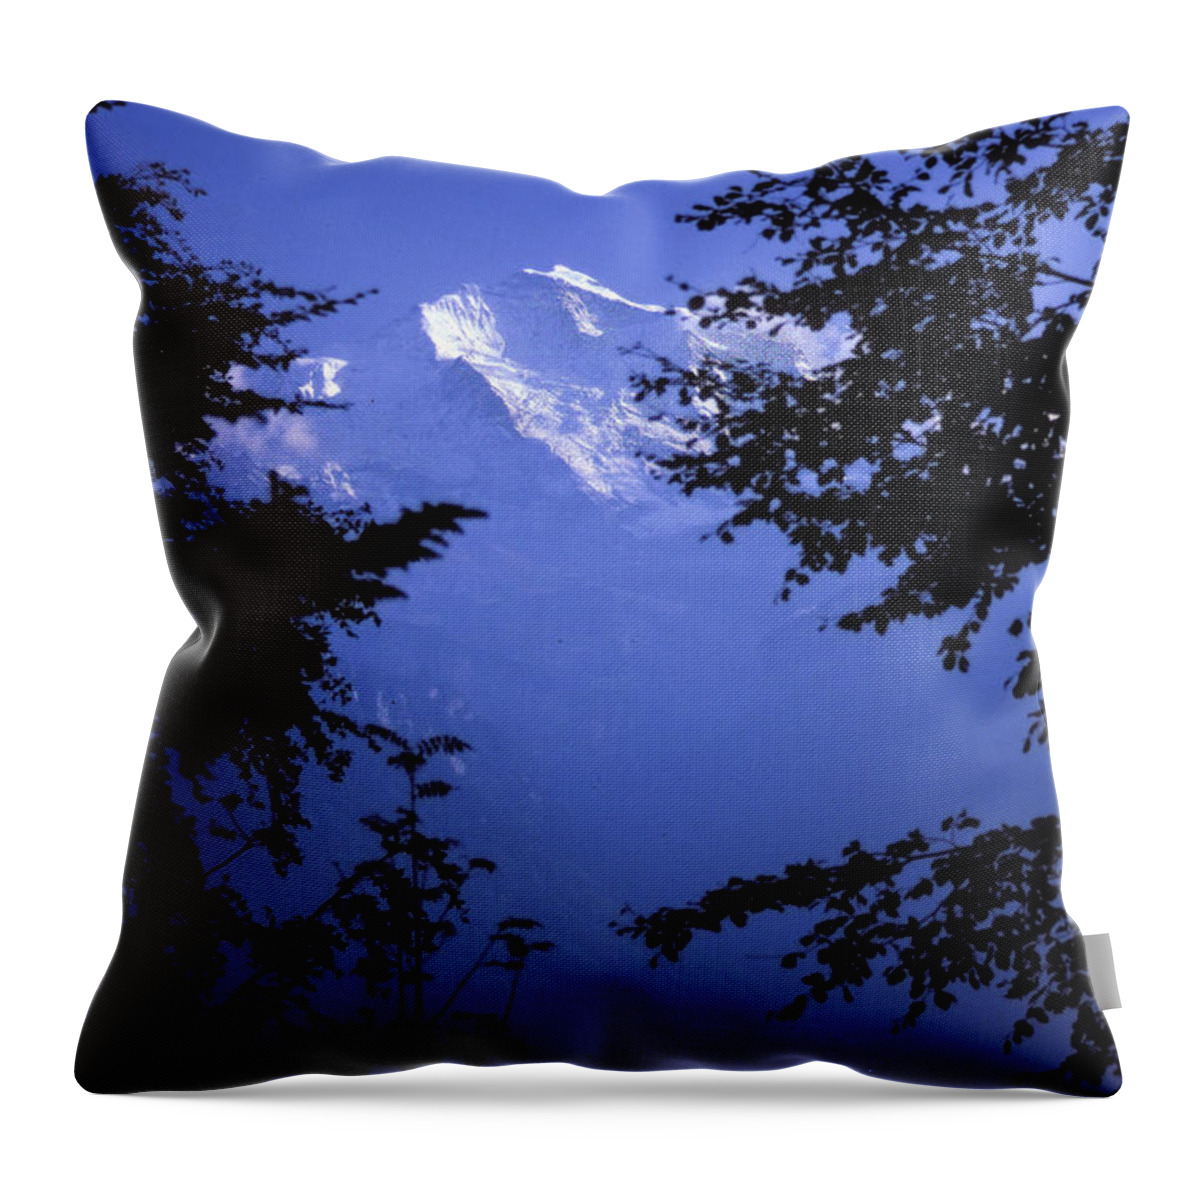 Jungfrau Throw Pillow featuring the photograph Jungfrau, Berner Oberland by Steve Ember